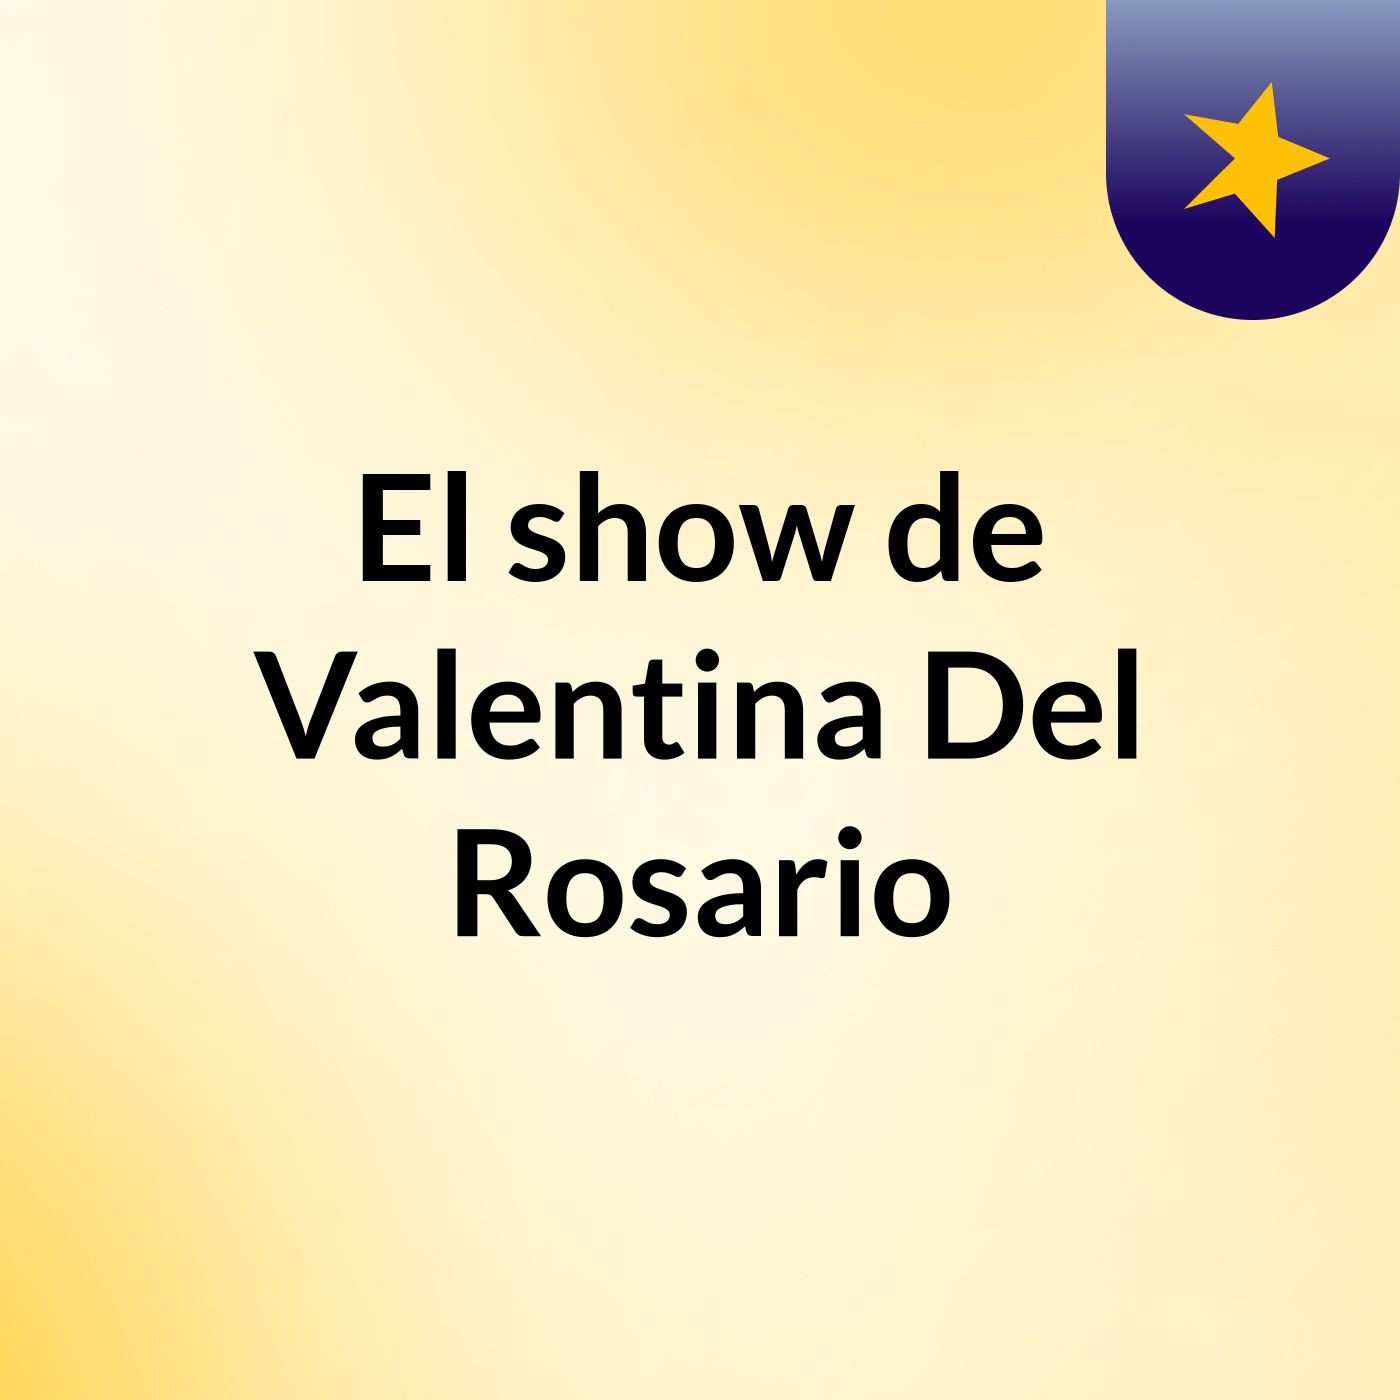 El show de Valentina Del Rosario